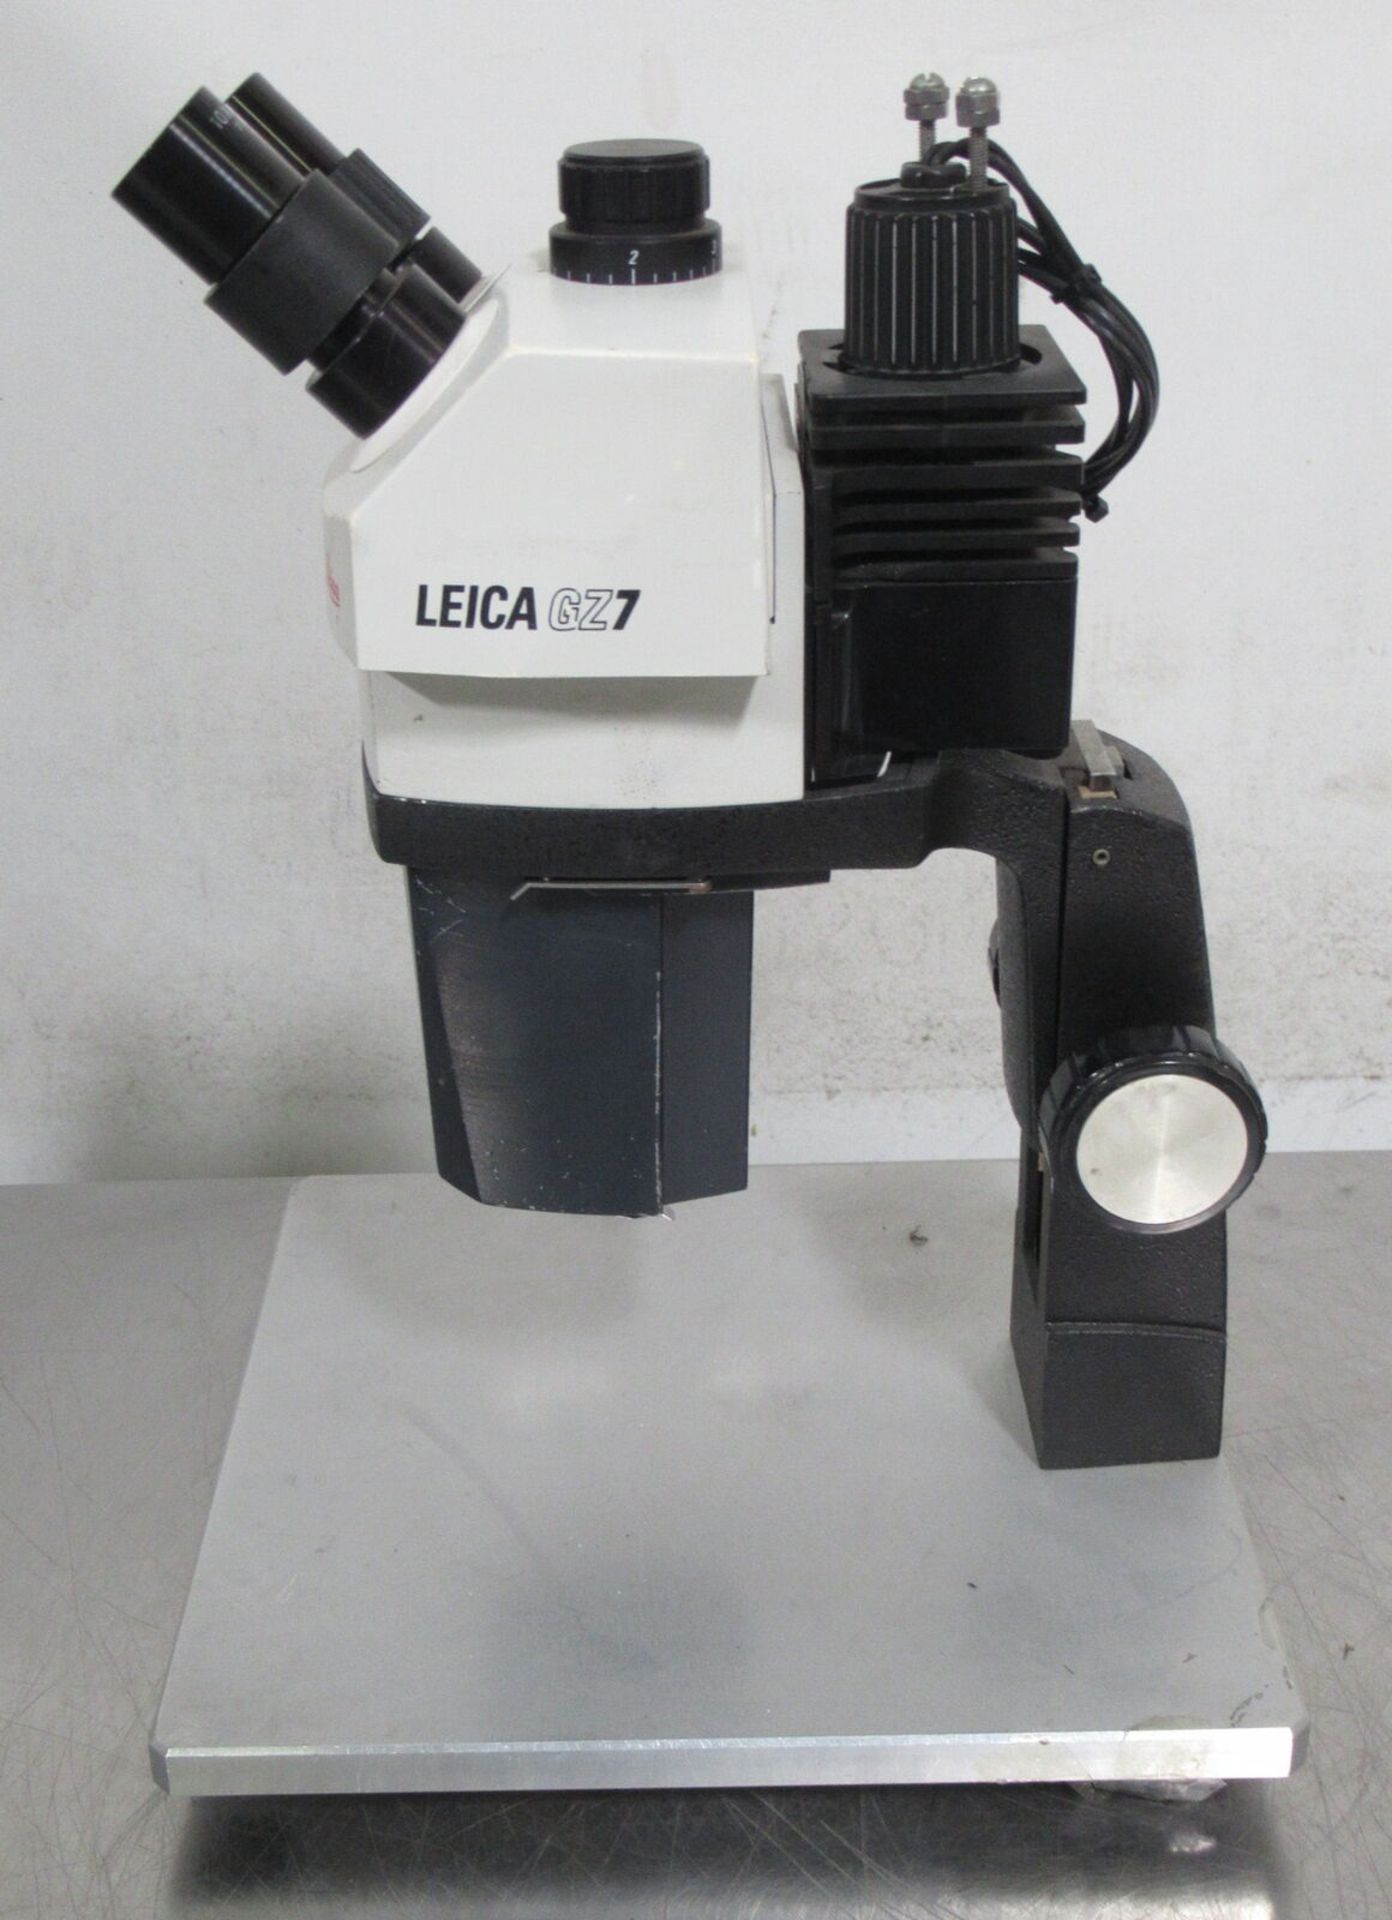 Leica GZ7 Stereo Zoom Microscope w/ Stand, 10X WF Eyepieces, Illuminator - Gilroy - Image 6 of 6